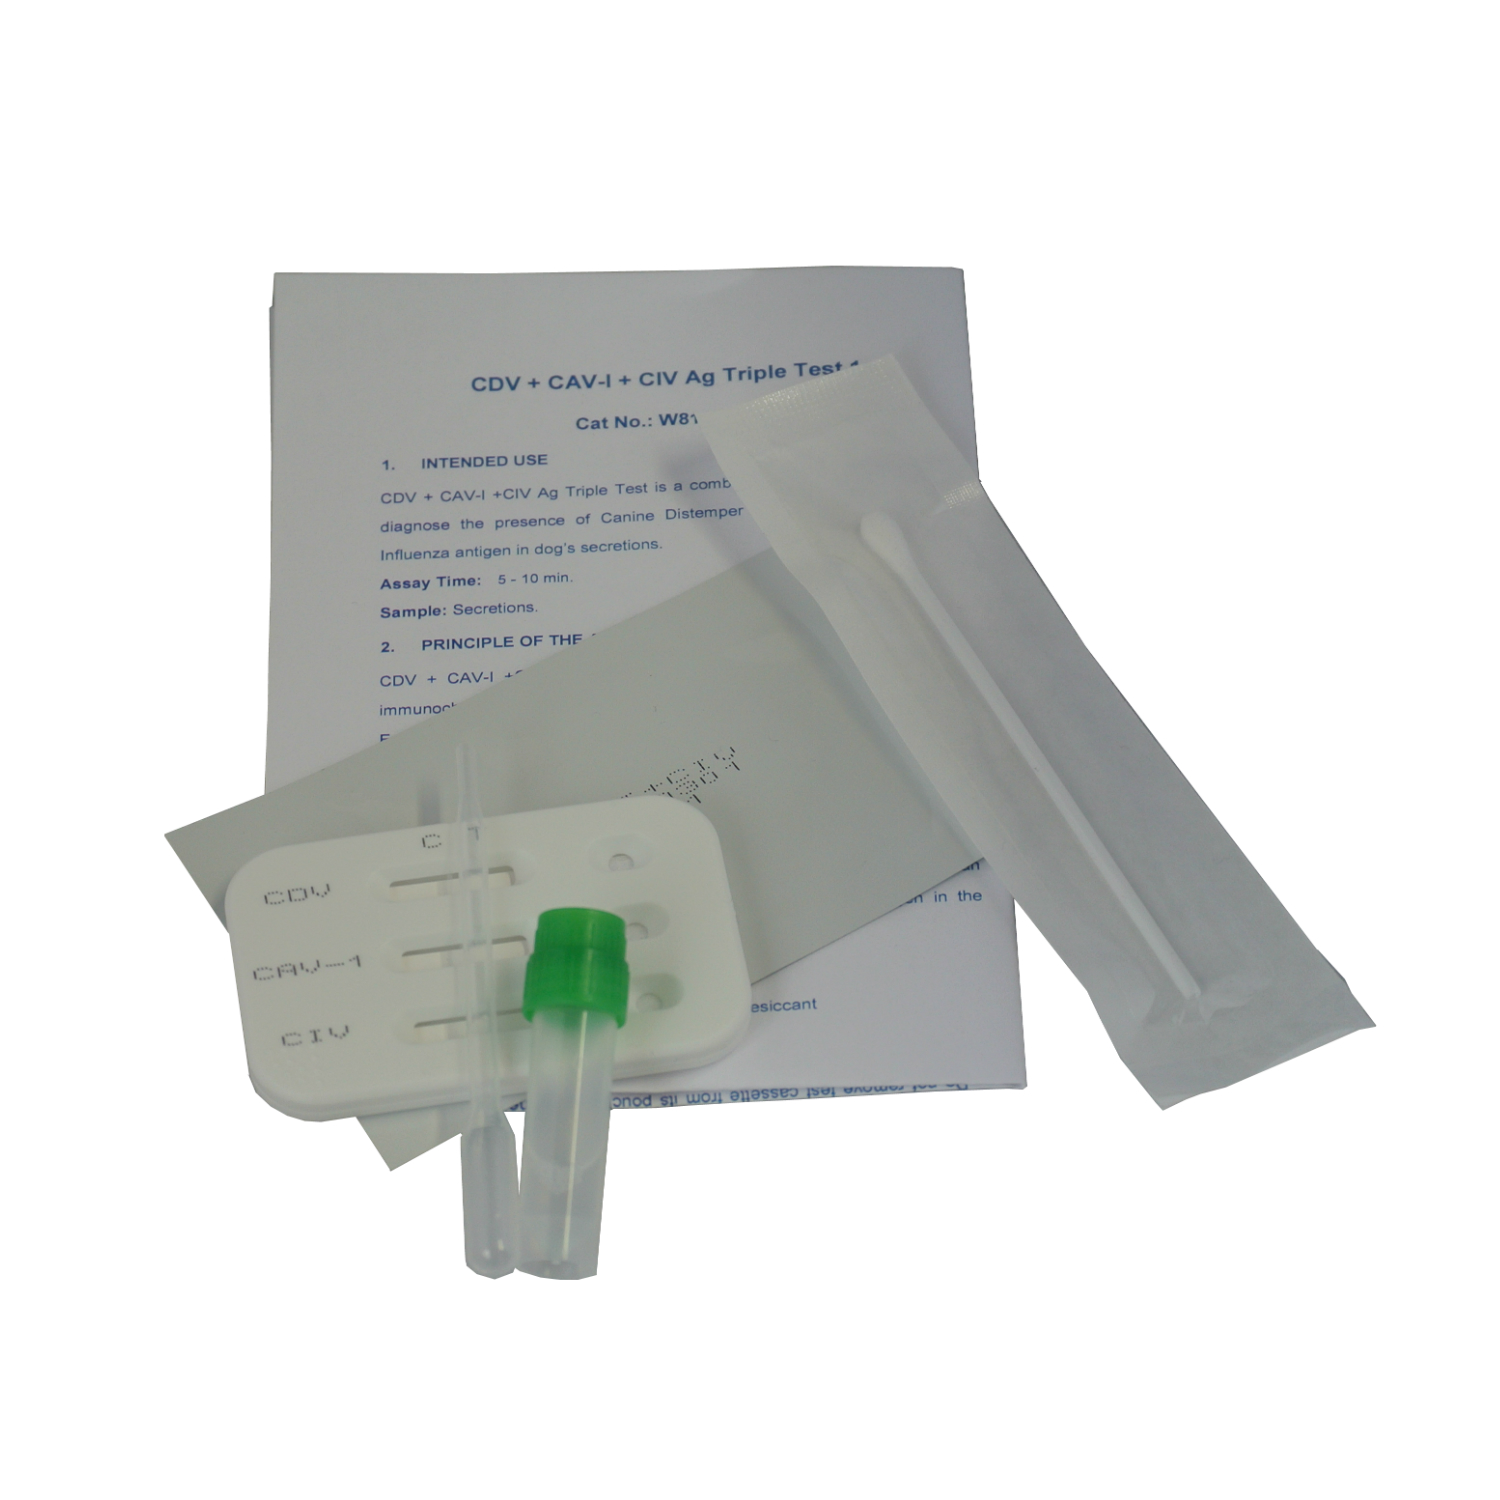 Dog Test Kit for Canine Distemper Adenovirus Type 1 and Influenza 3 in 1 Pack | eBay1500 x 1500